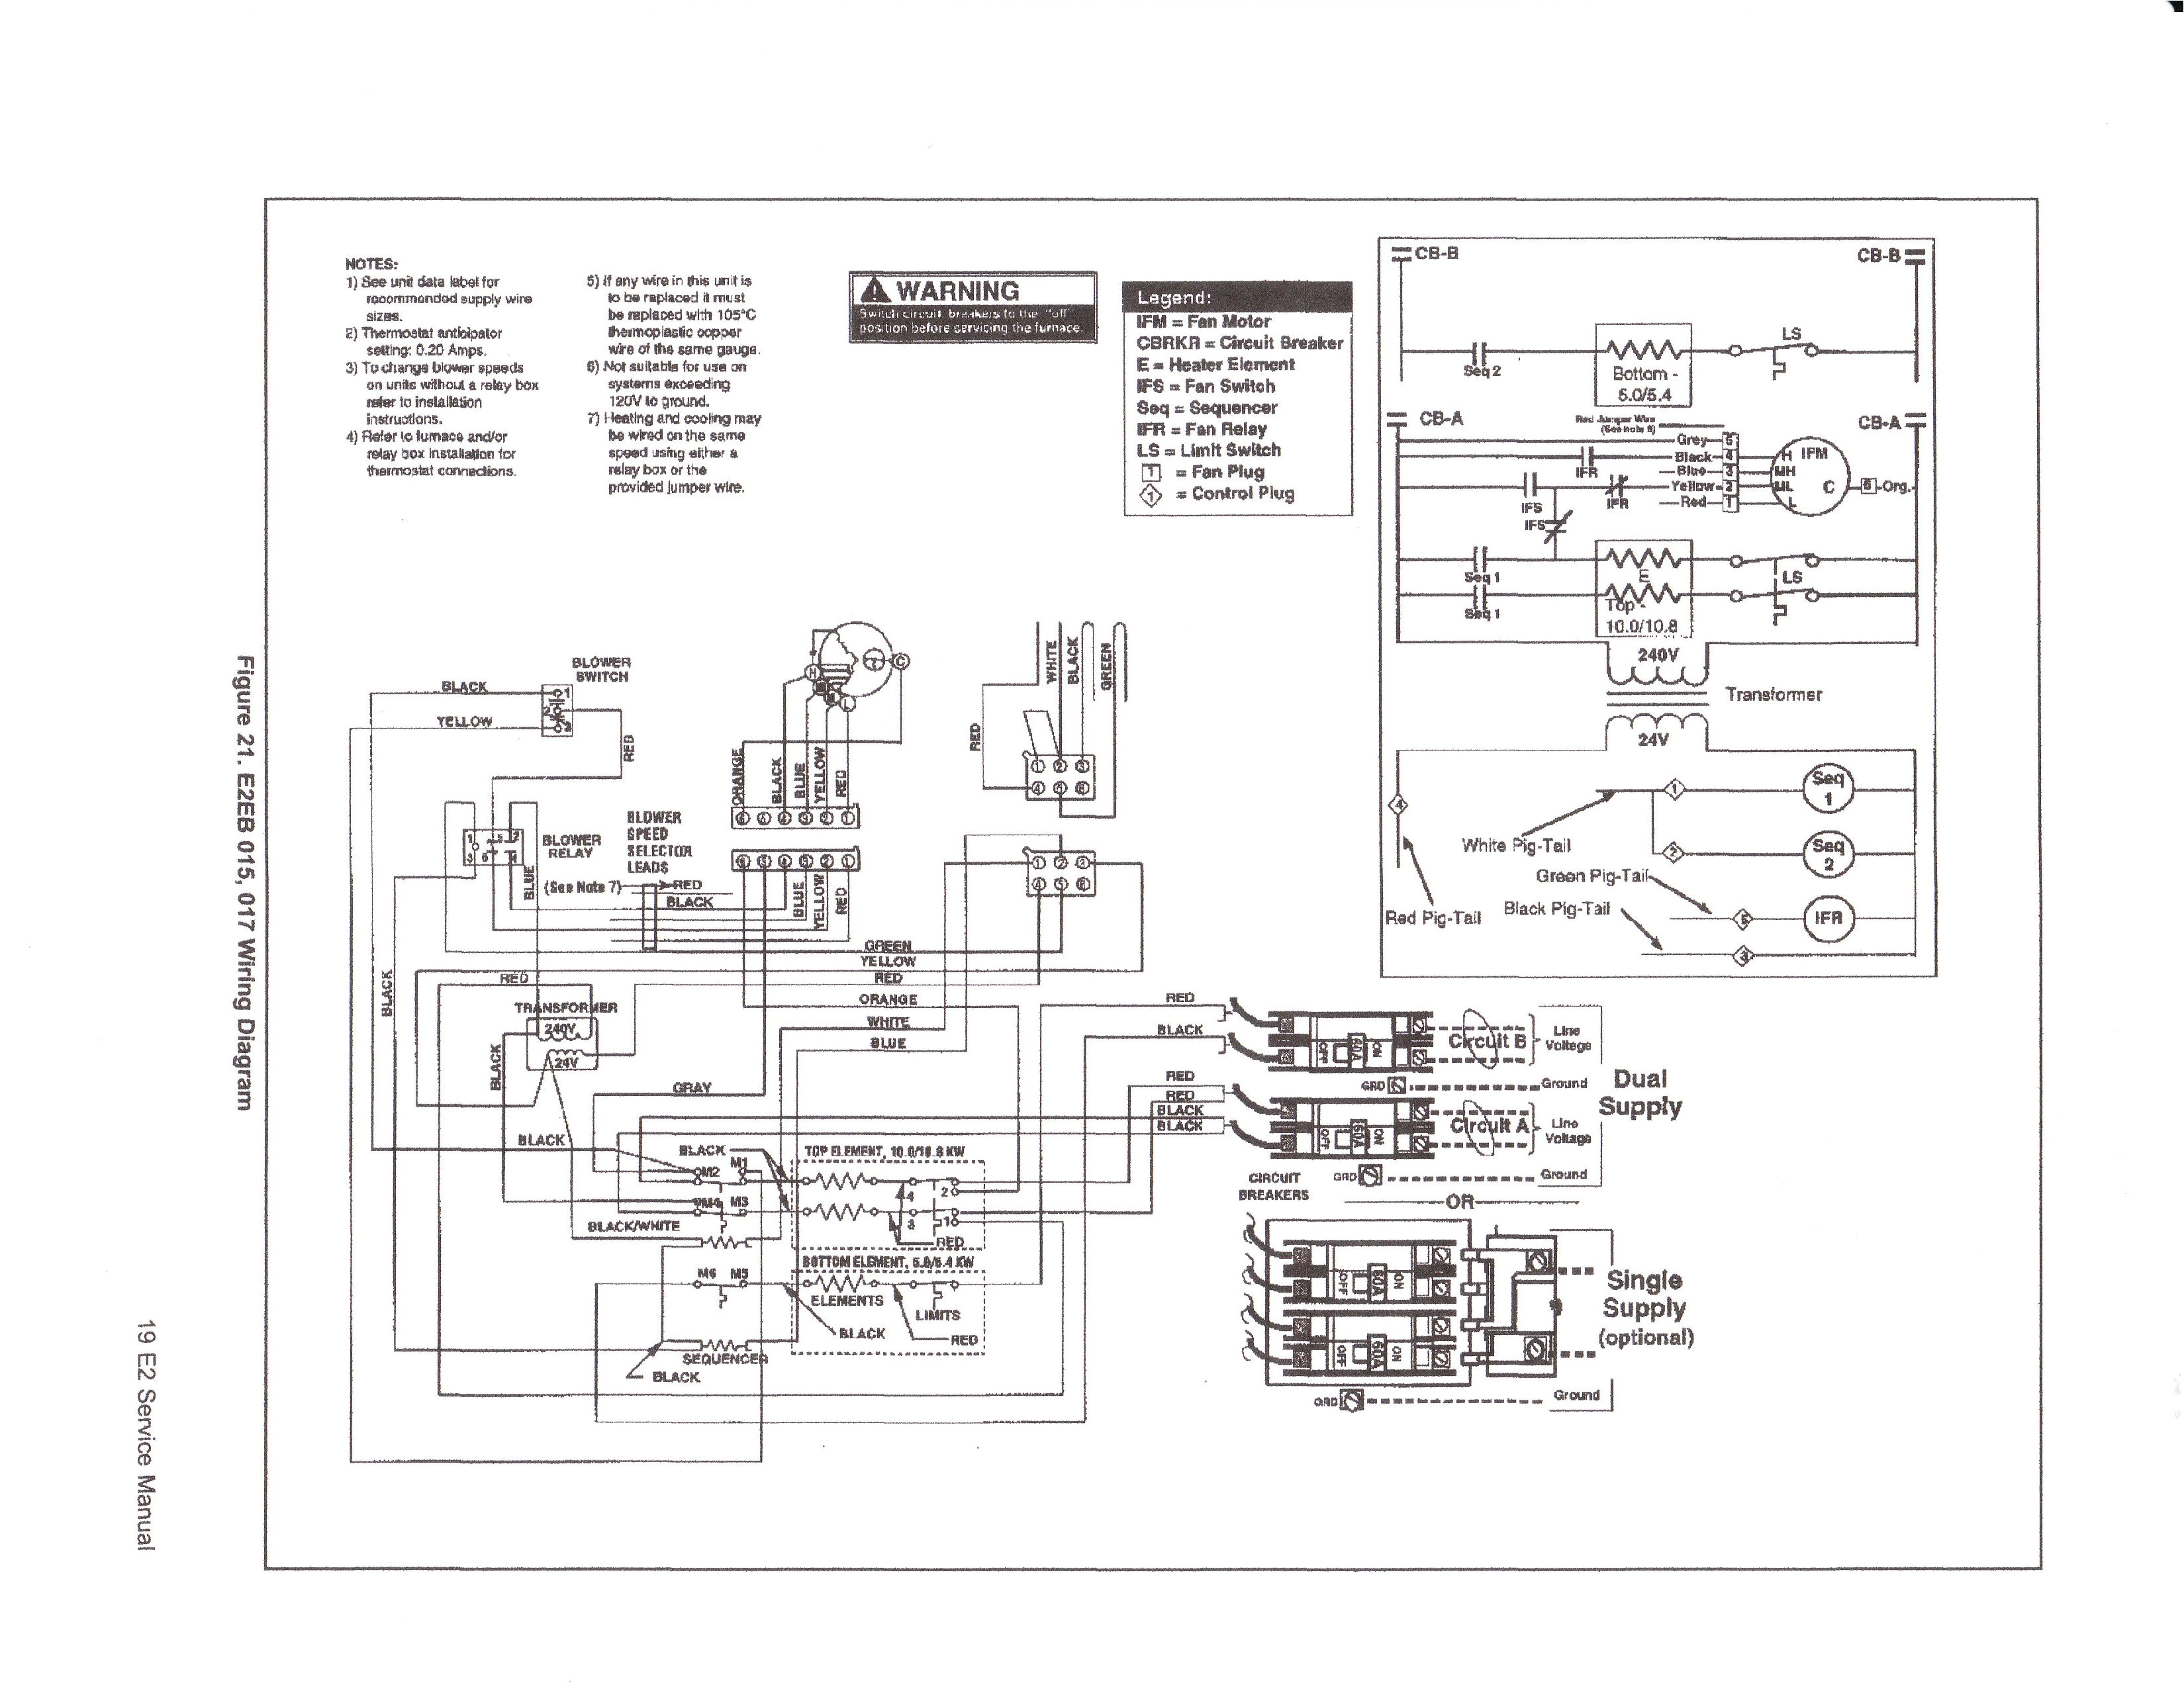 i have a nordyne model e2eb 012ha heating w ac unit in my home e2eb 012ha wiring diagram e2eb 012ha wiring diagram